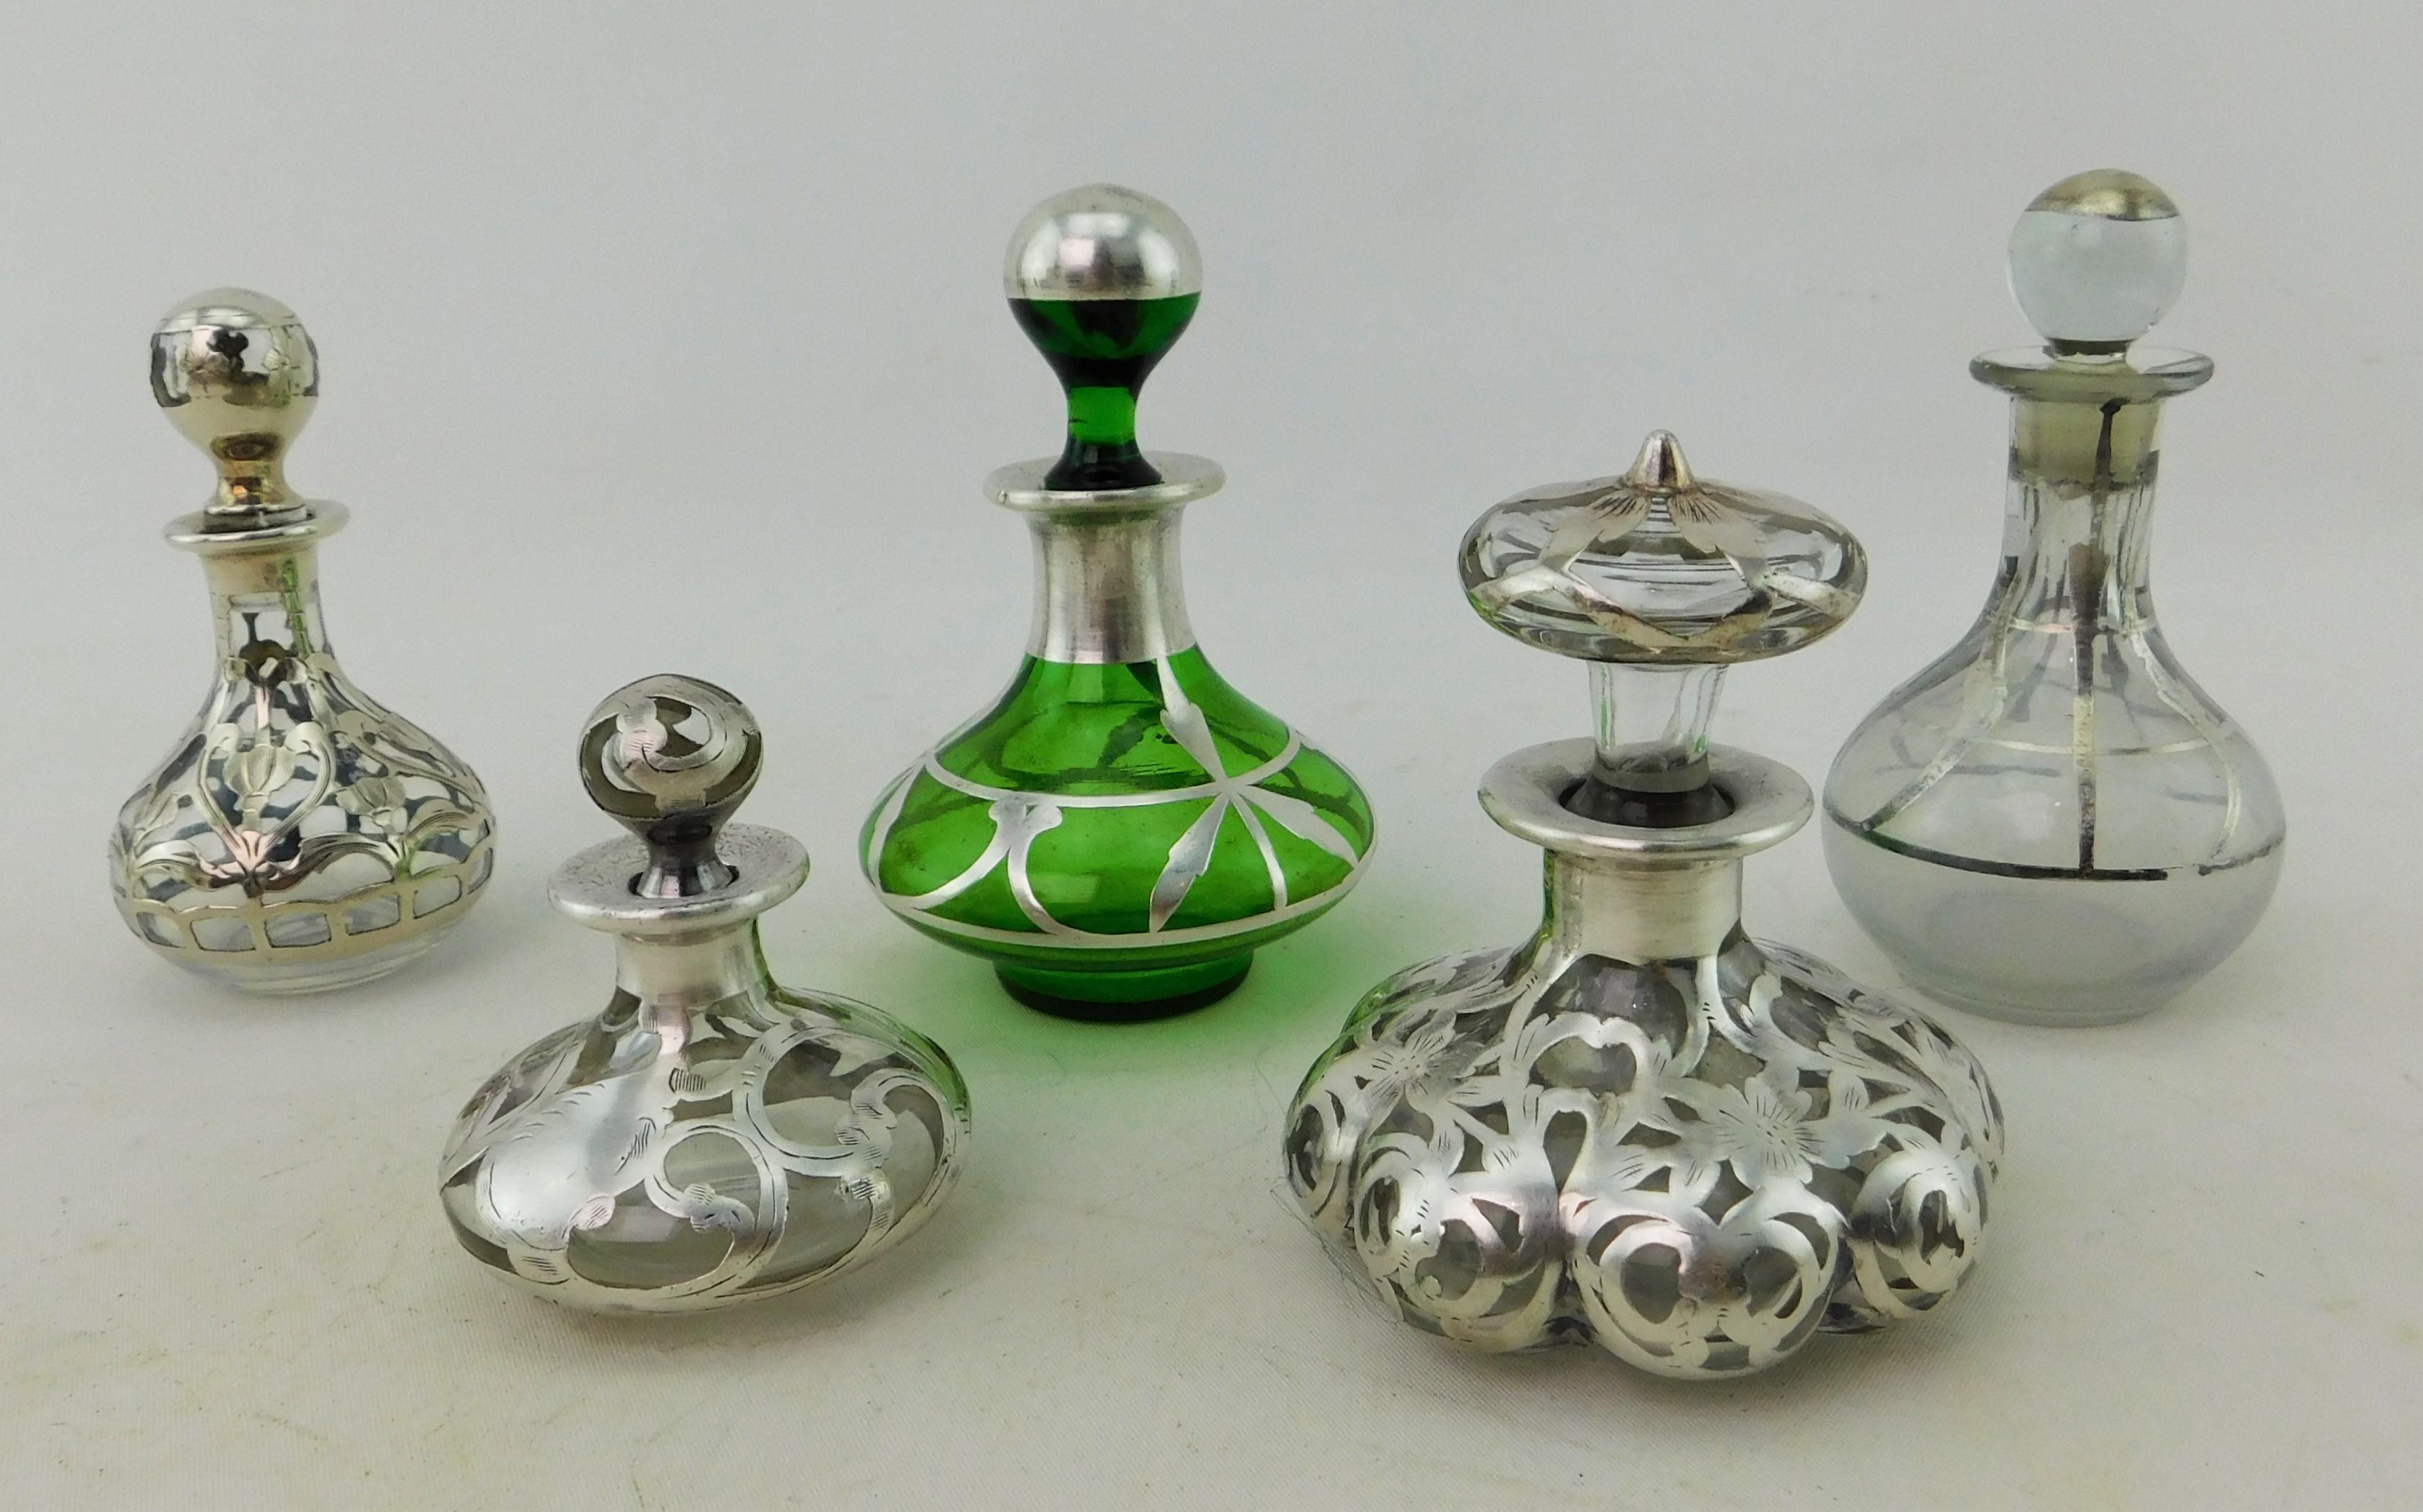 European Five Art Nouveau Perfume Bottles circa 1900 Silver Overlay on Glass 19th Century